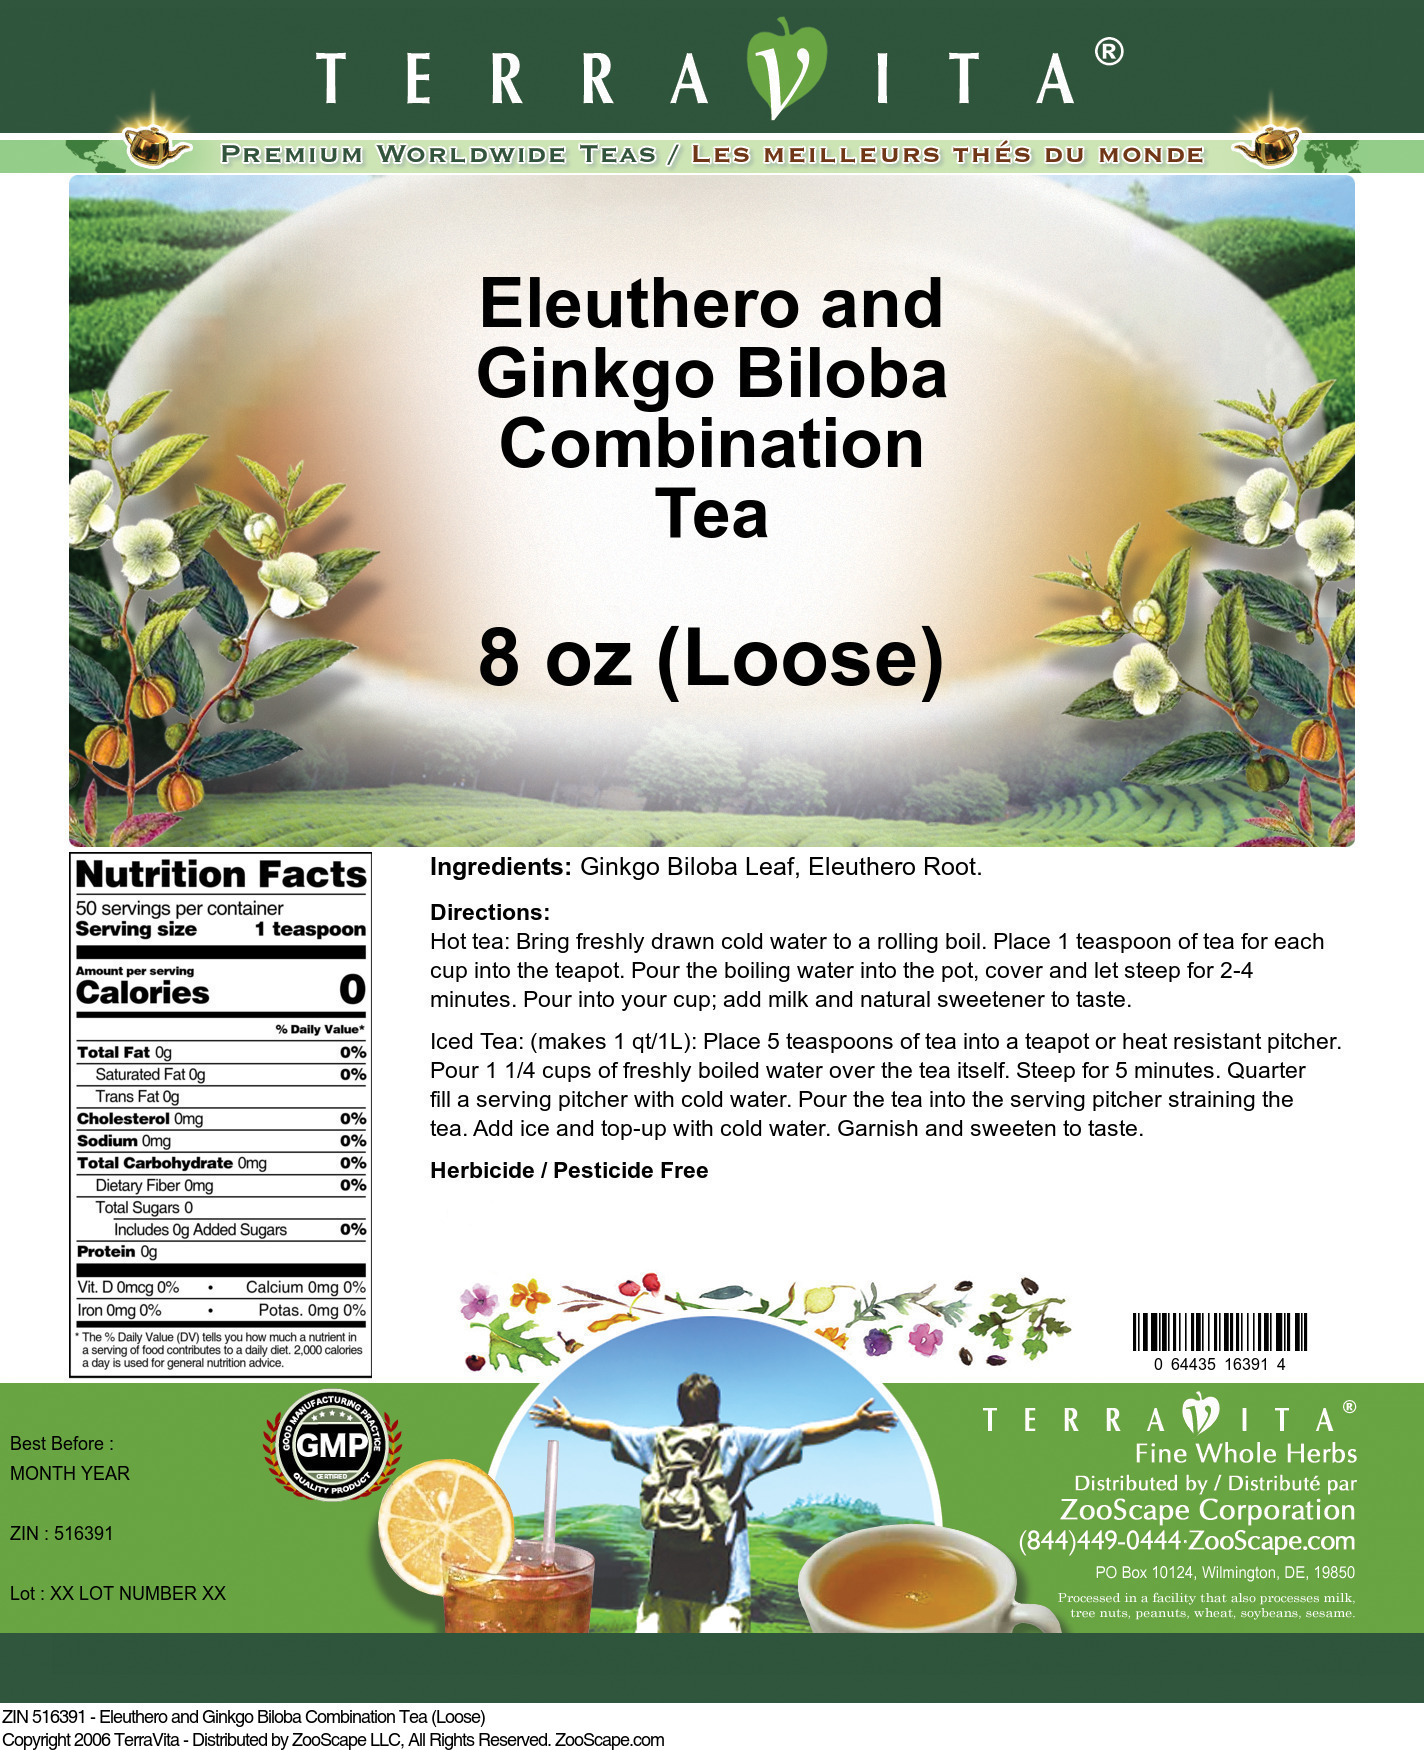 Eleuthero and Ginkgo Biloba Combination Tea (Loose) - Label